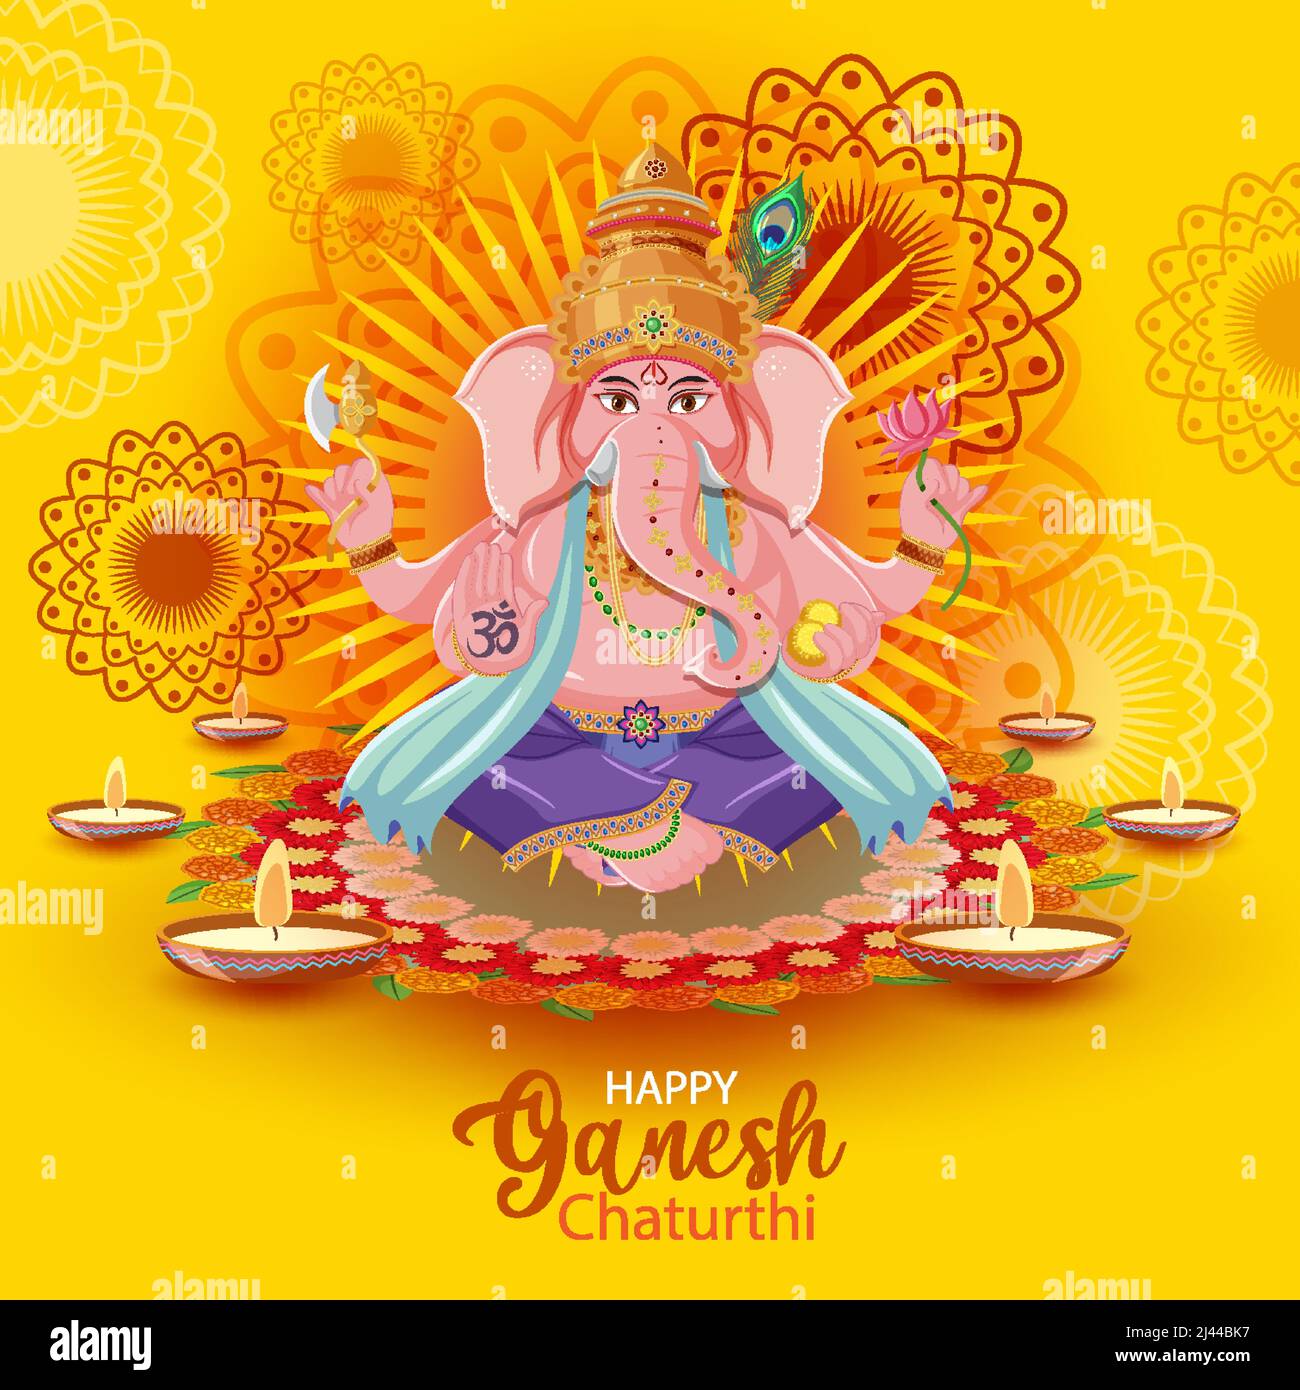 Happy Ganesh Chaturthi Poster illustration Stock Vector Image & Art - Alamy